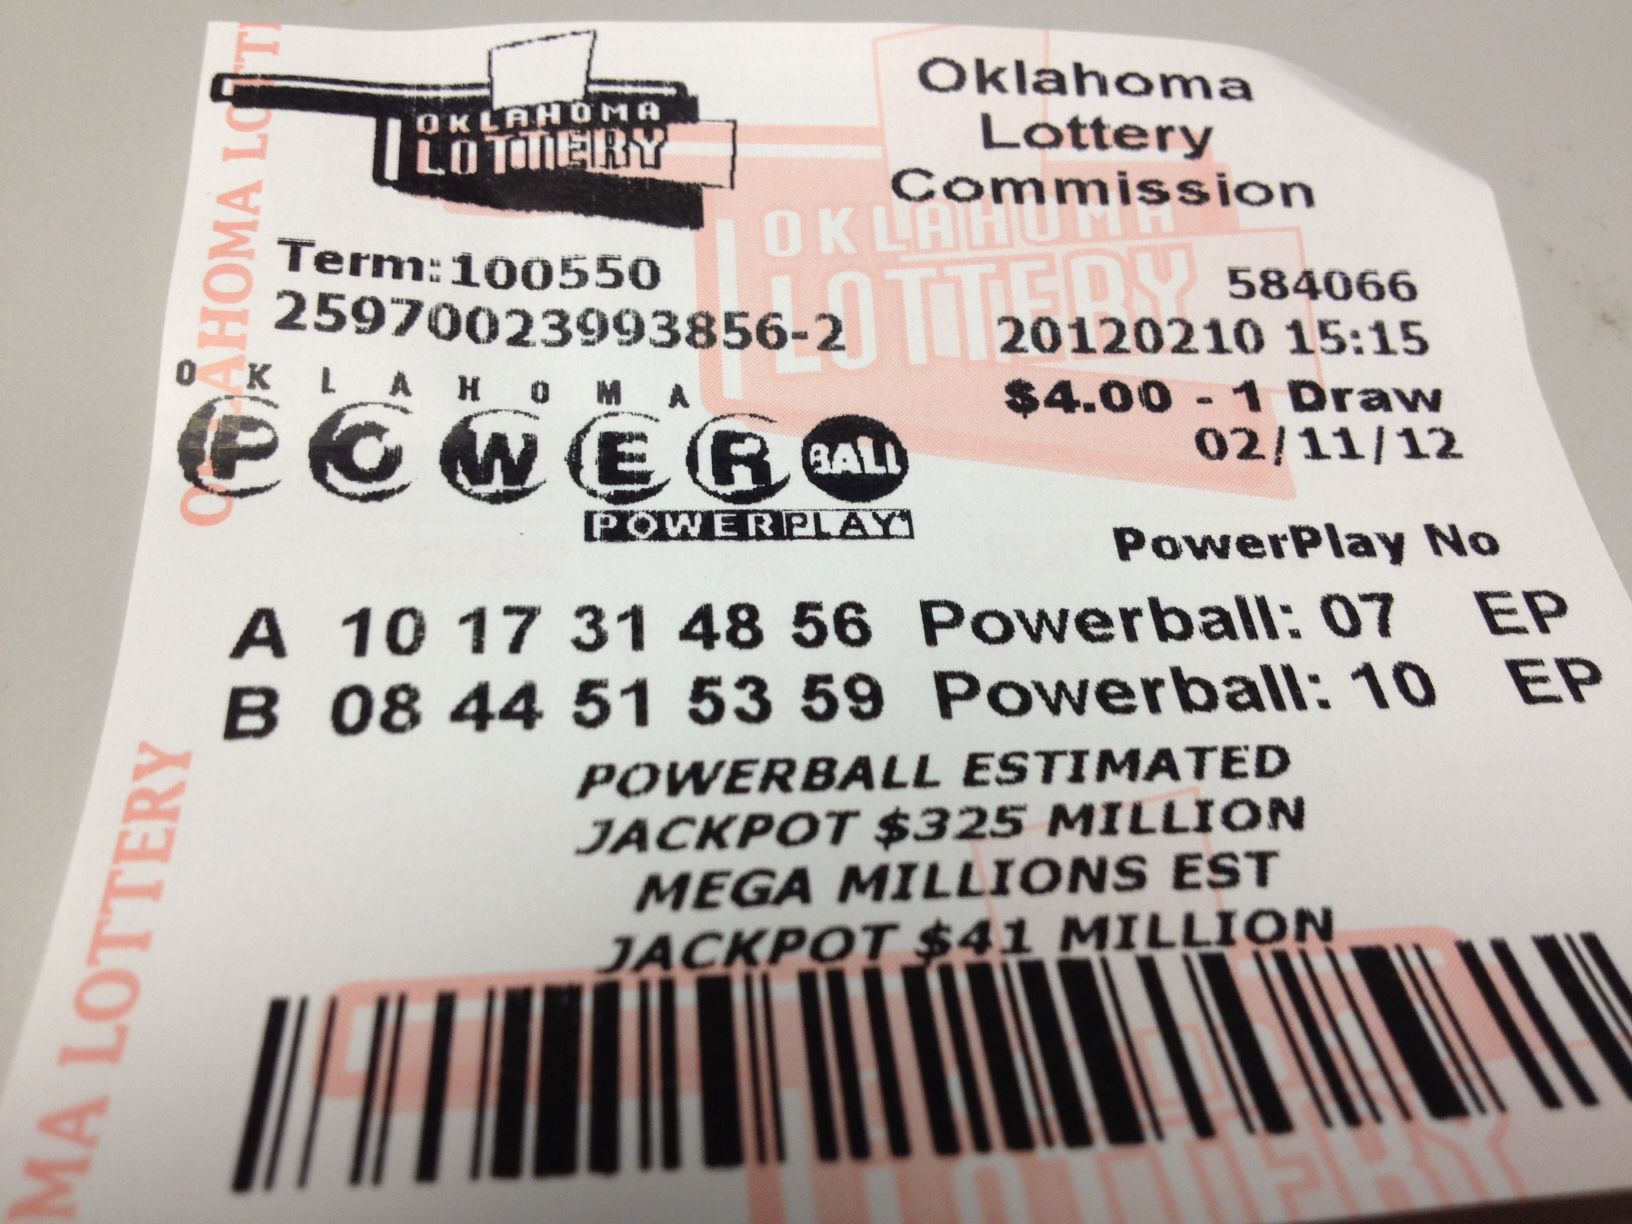 Oklahoma Lottery Mobile App